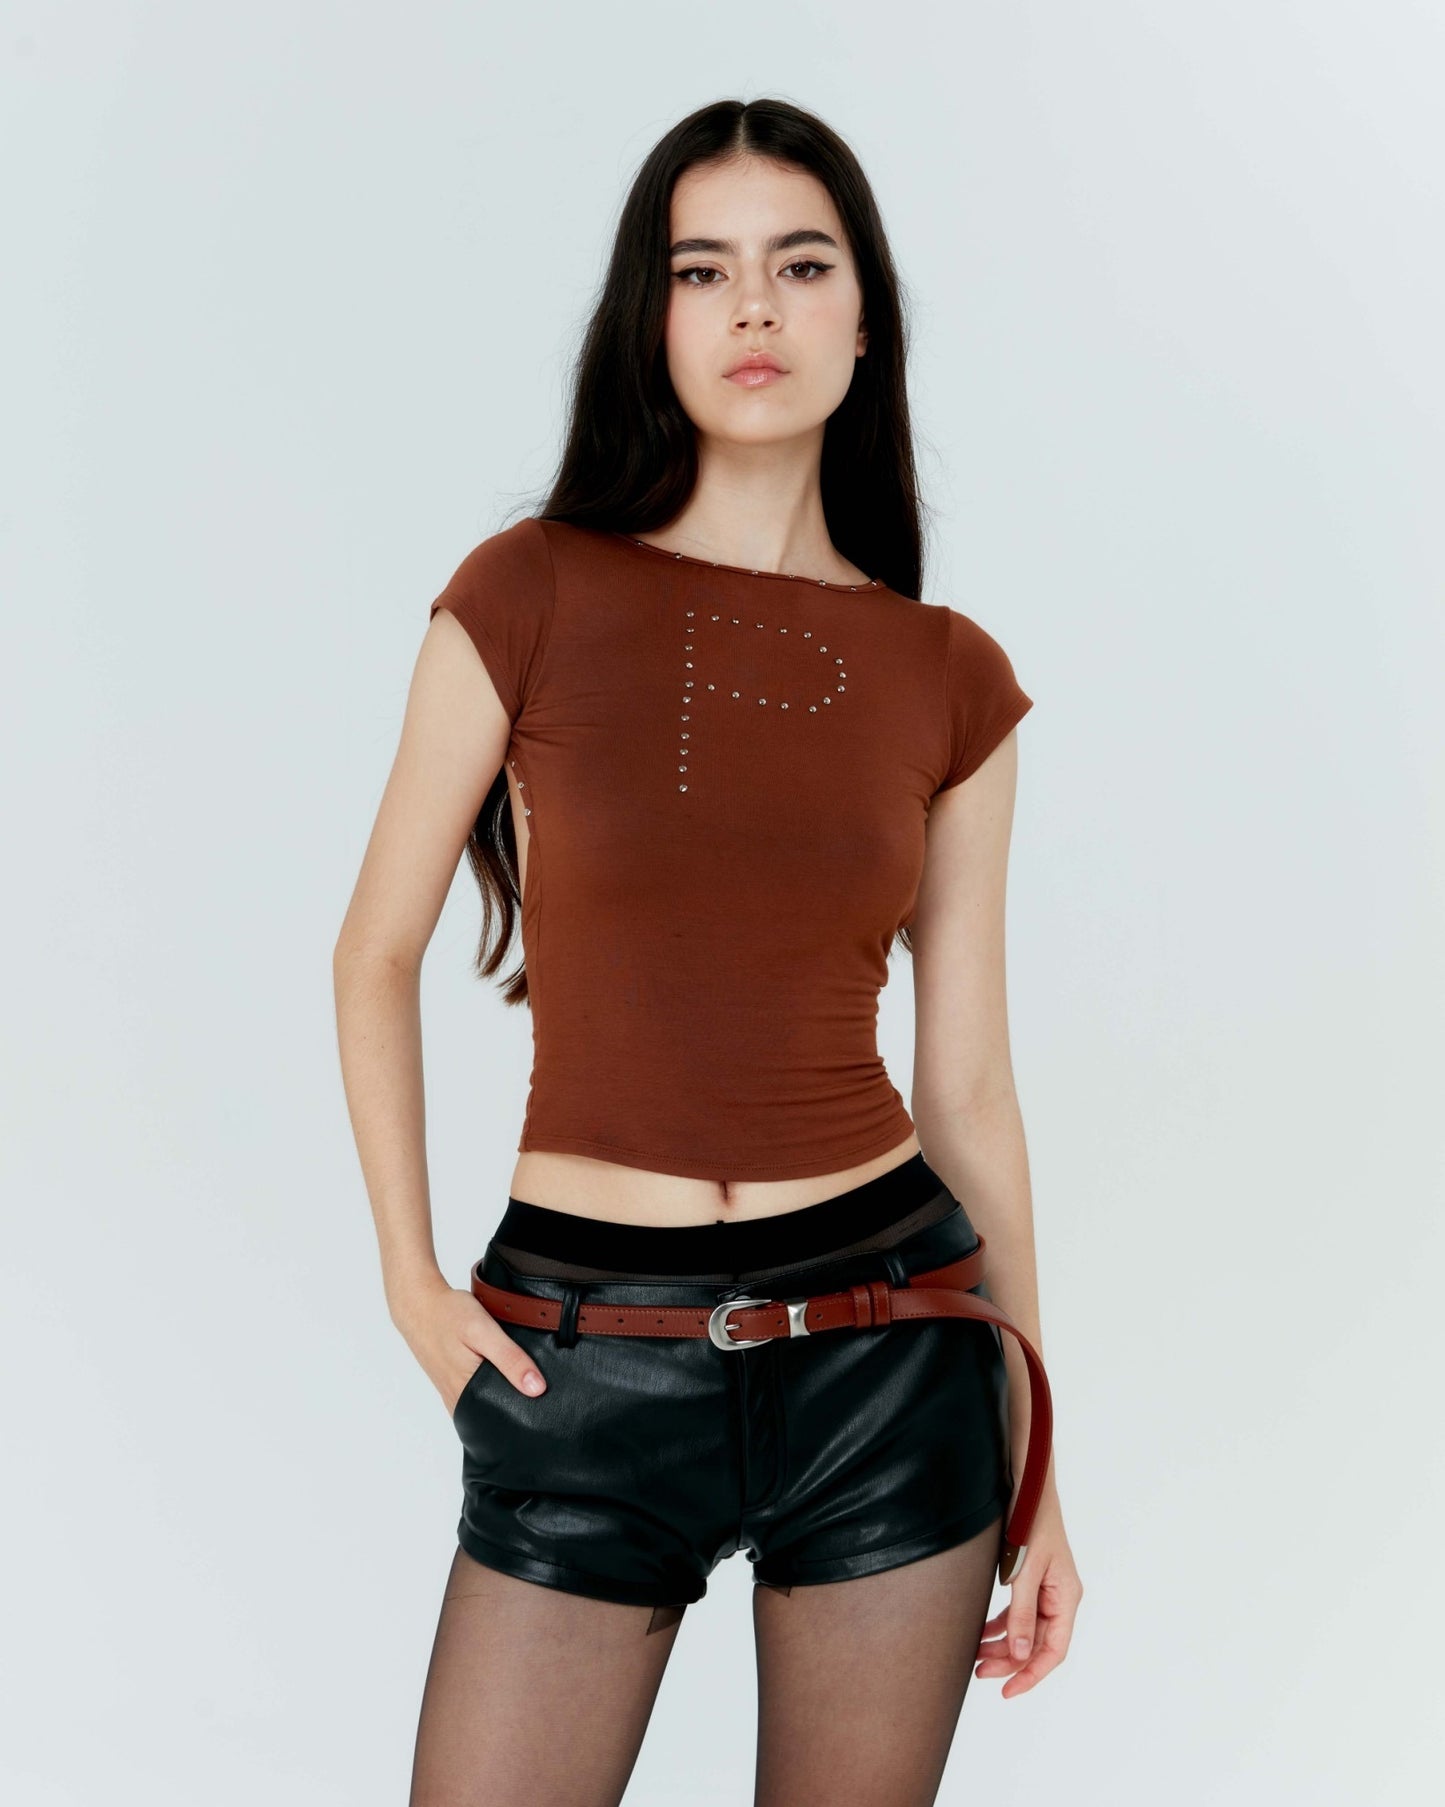 Piccoro - Hot Leather Shorts